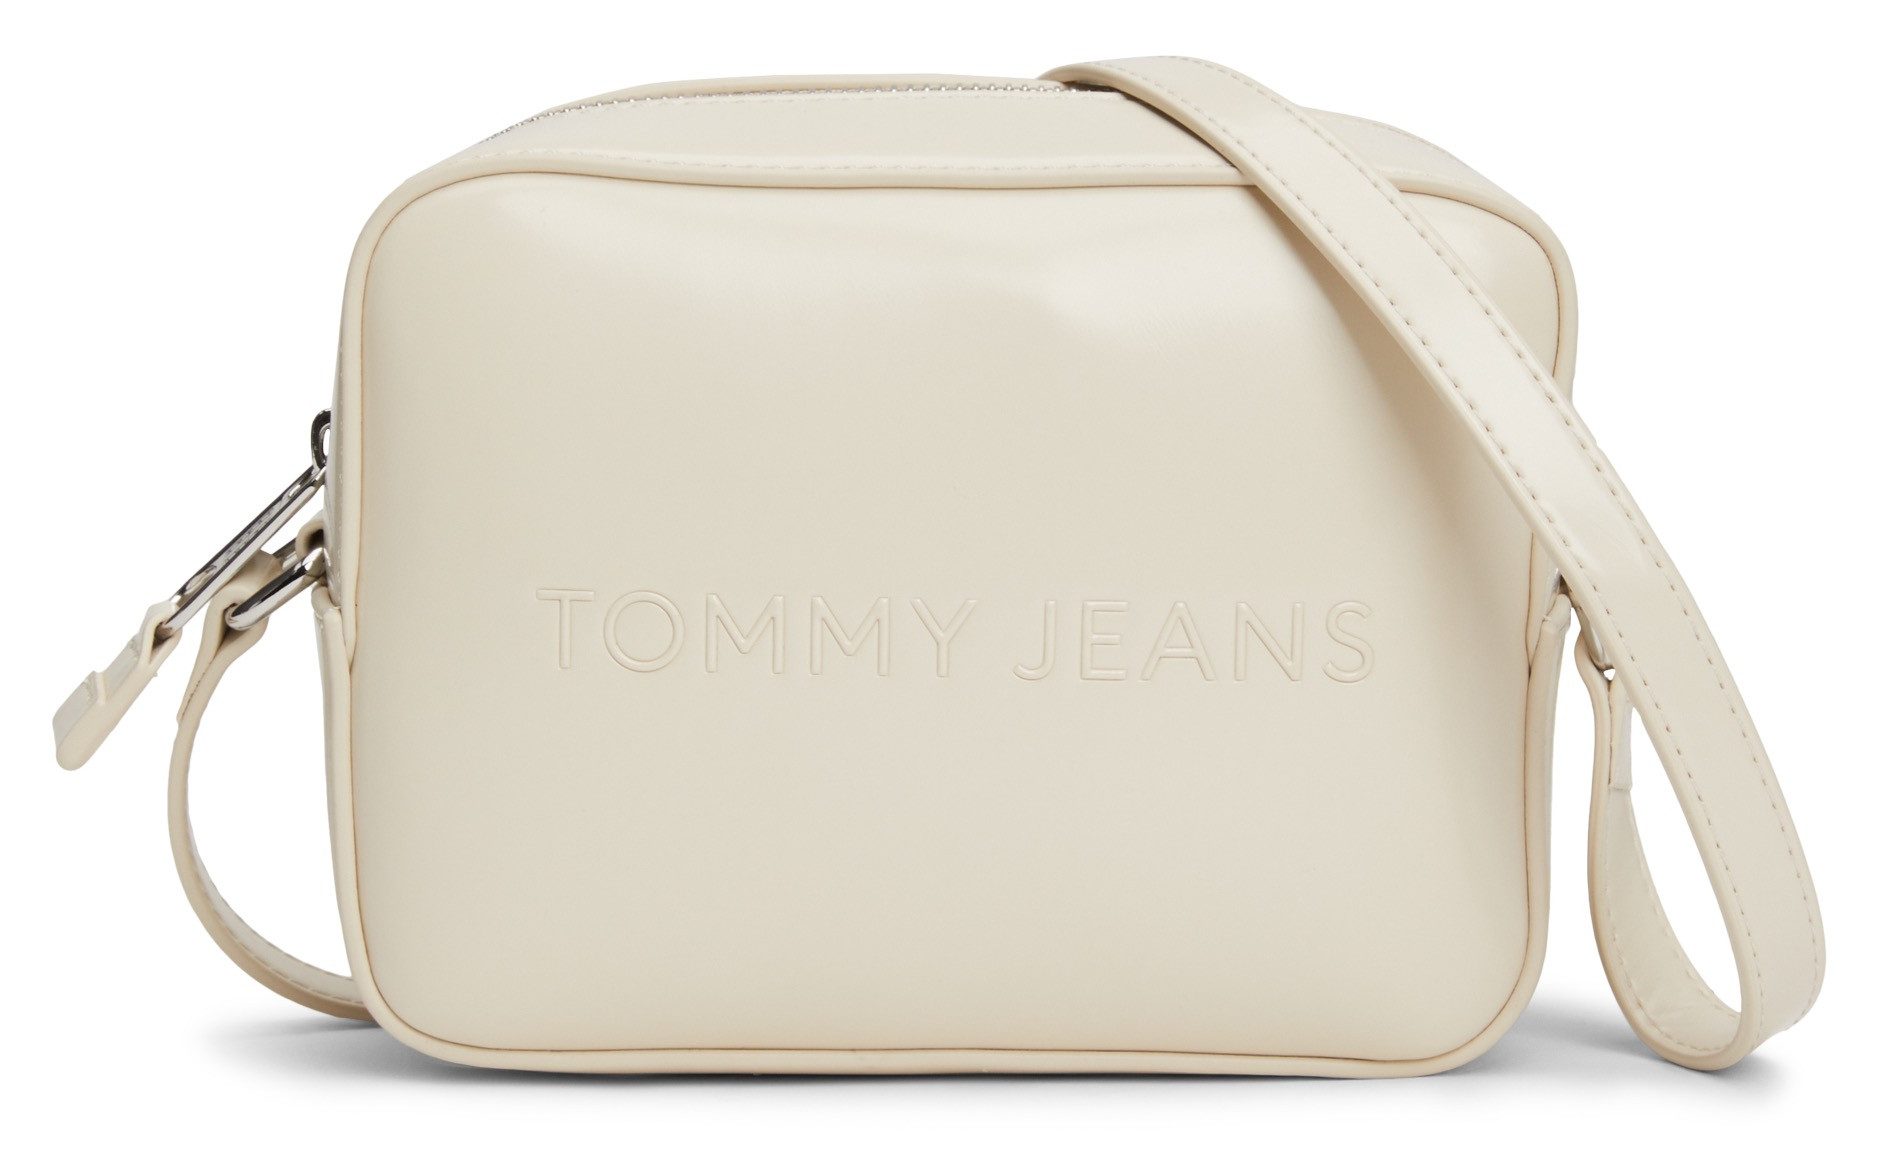 Tommy Jeans Mini Bag